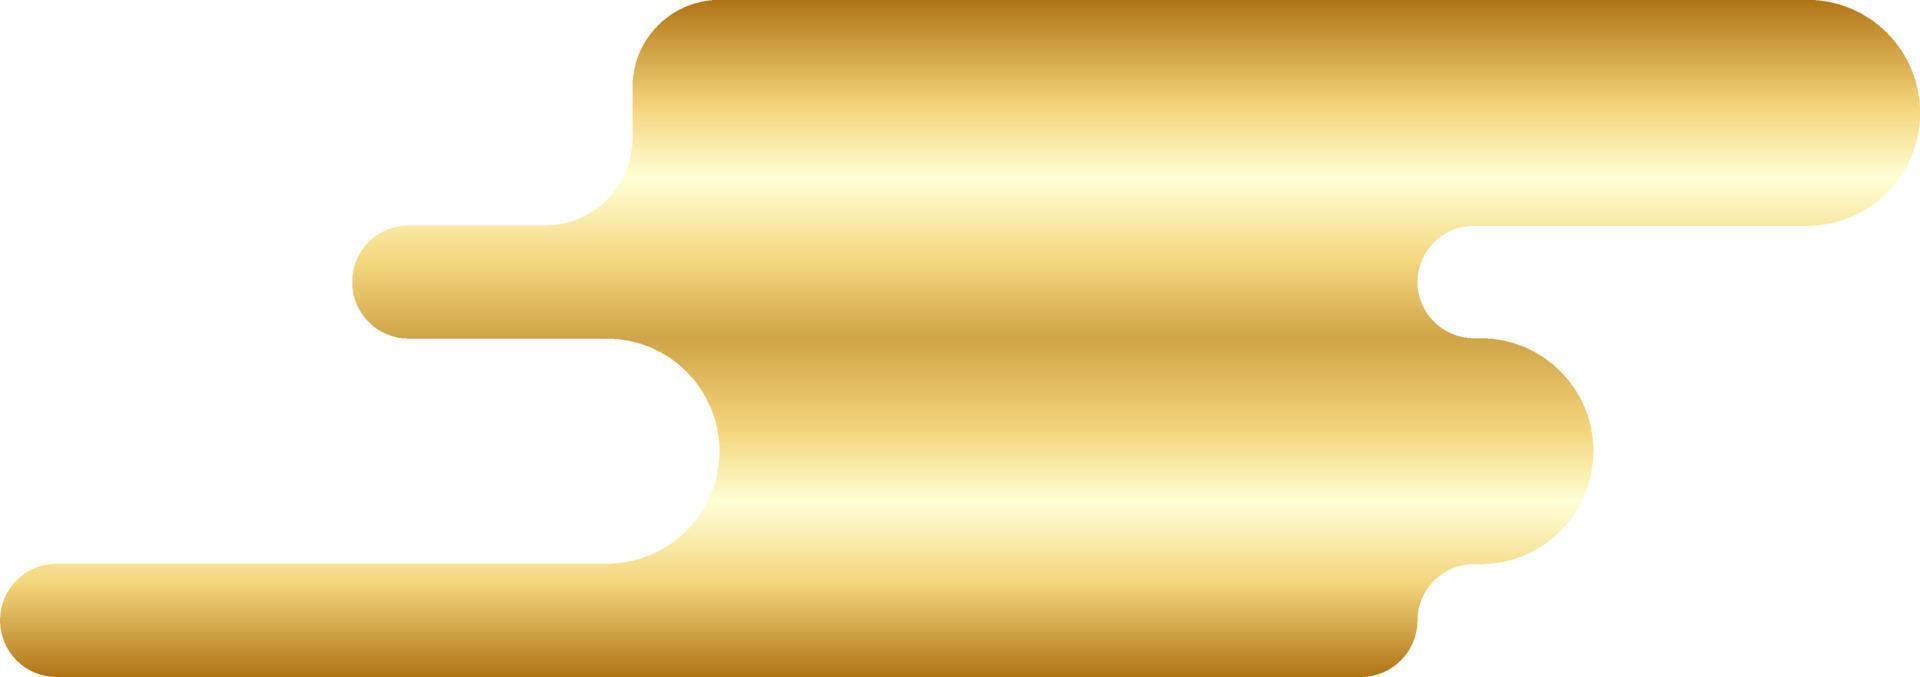 abstrakter goldener minimaler runder formvektor vektor